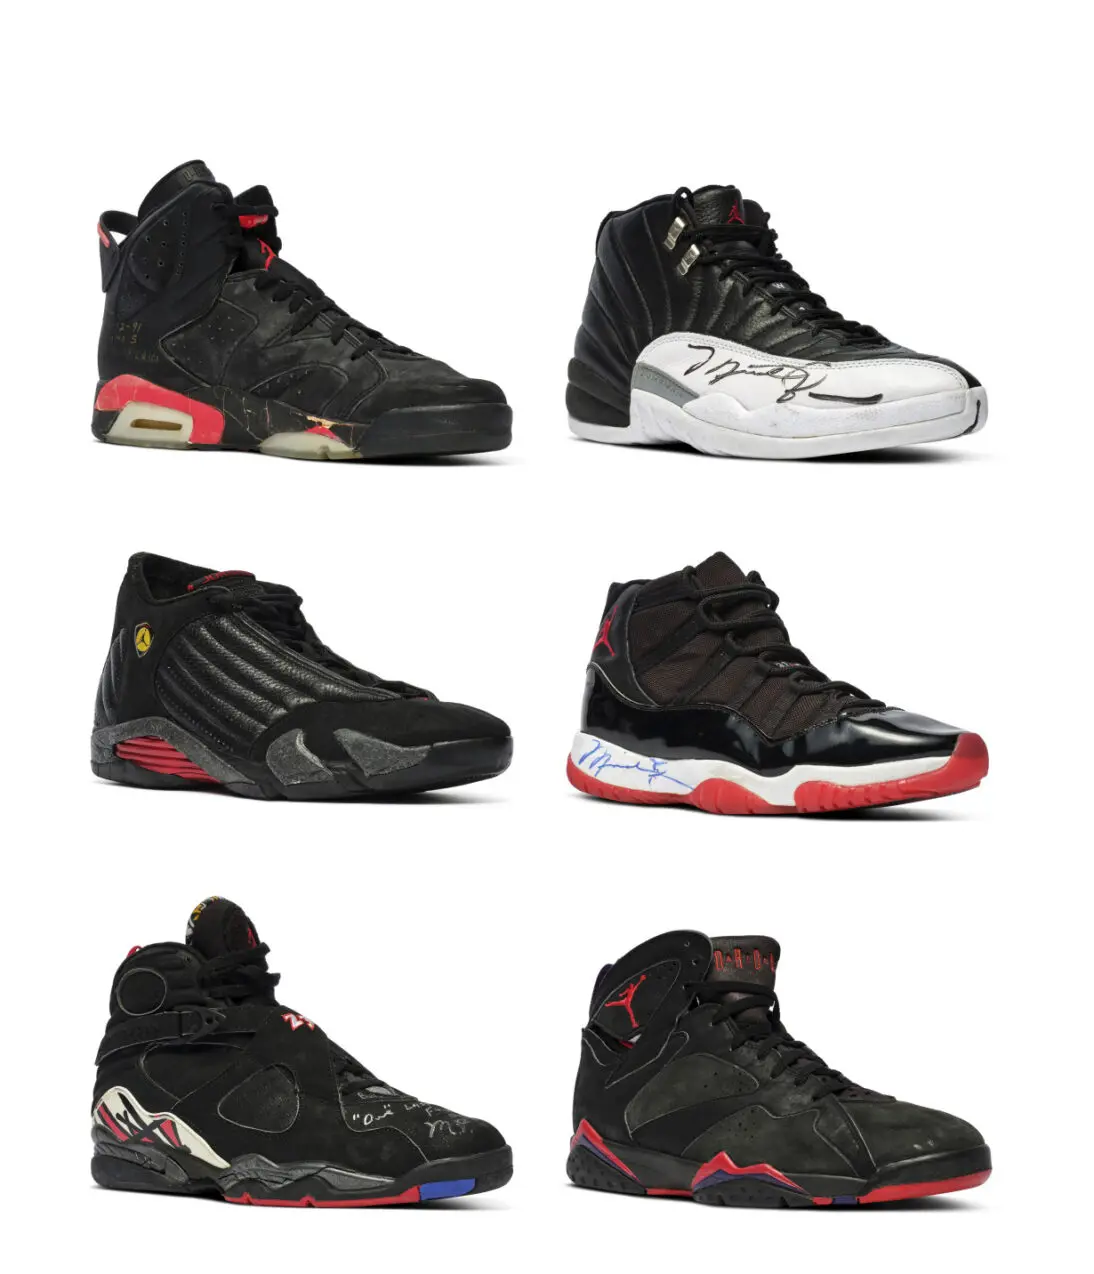 LA Post: 1 icon, 6 shoes, $8 million: An auction of Michael Jordan's championship sneakers sets a record